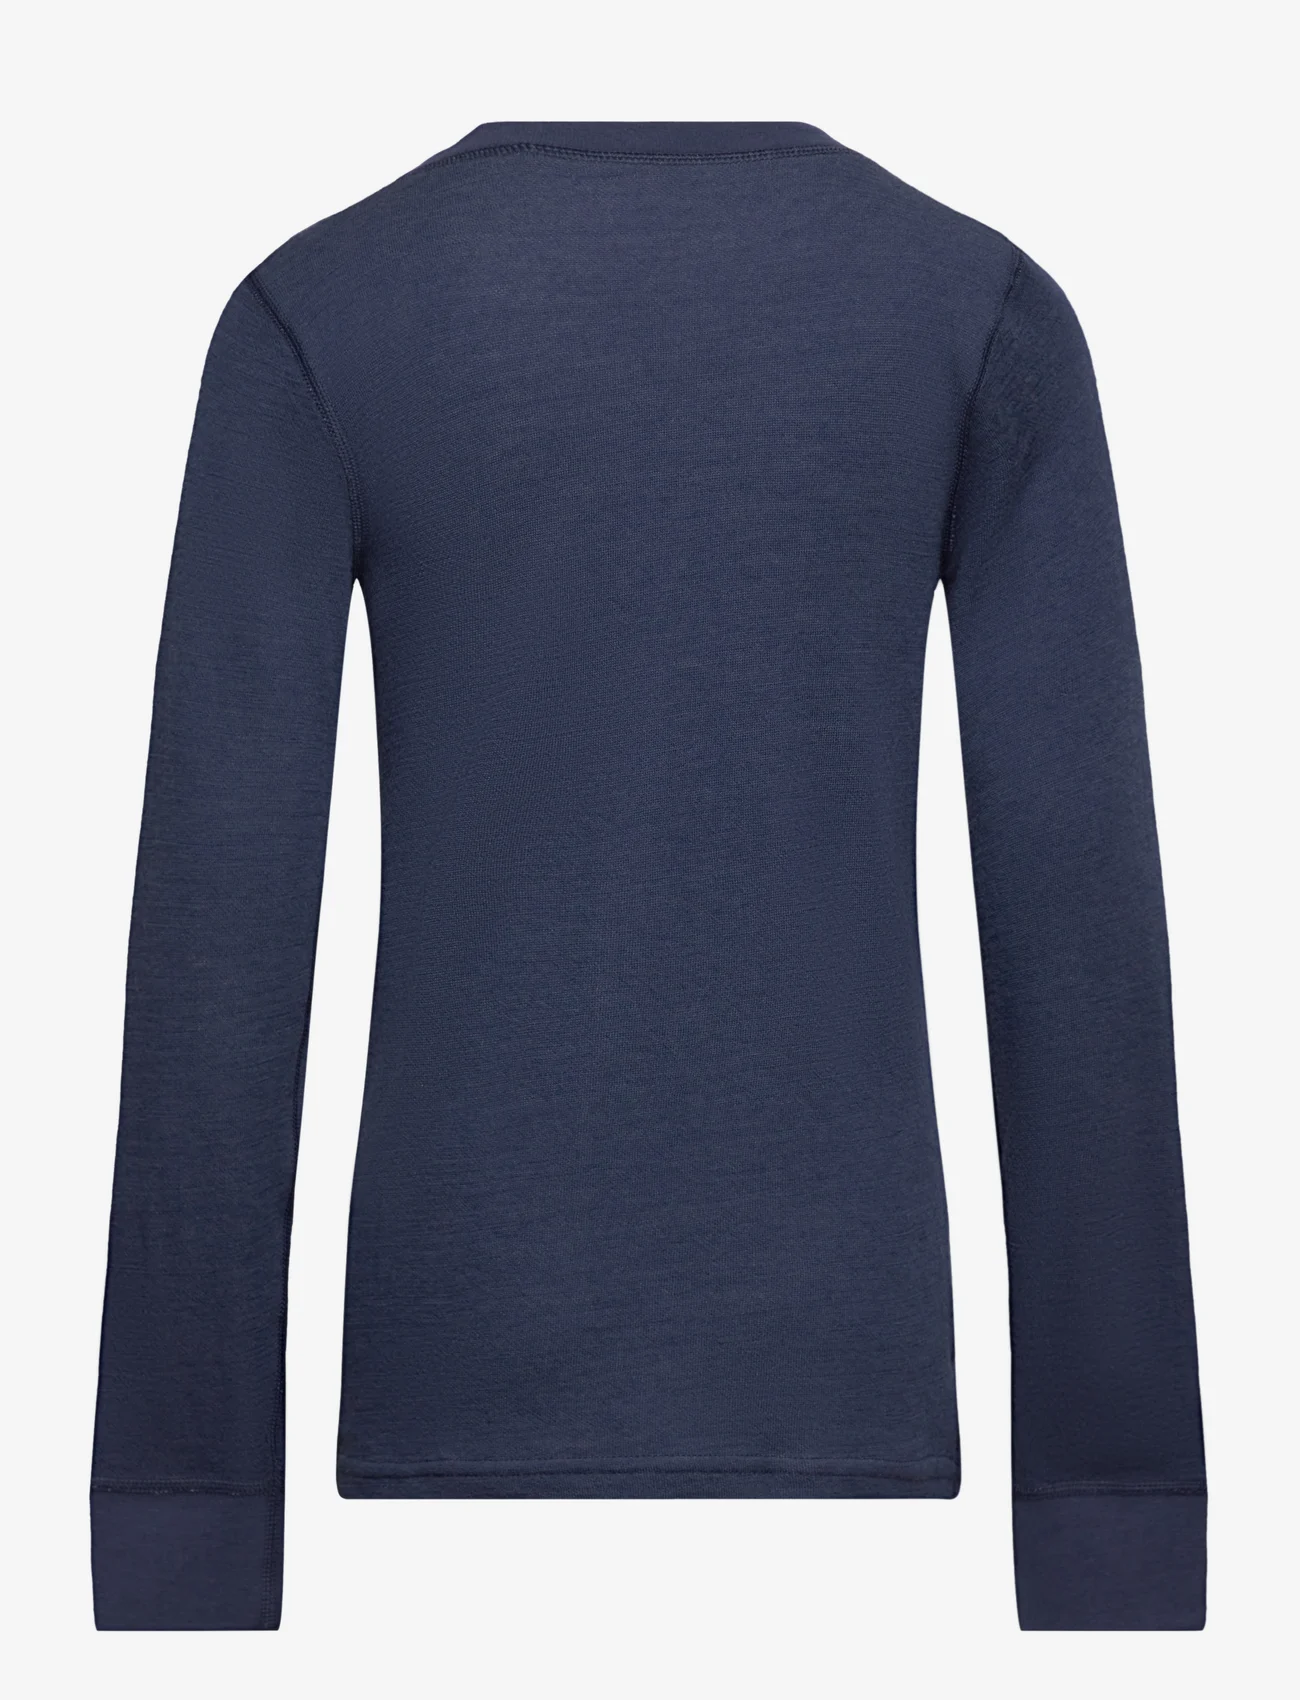 CeLaVi - Blouse LS, w. print - marškinėliai ilgomis rankovėmis - dark blue - 1